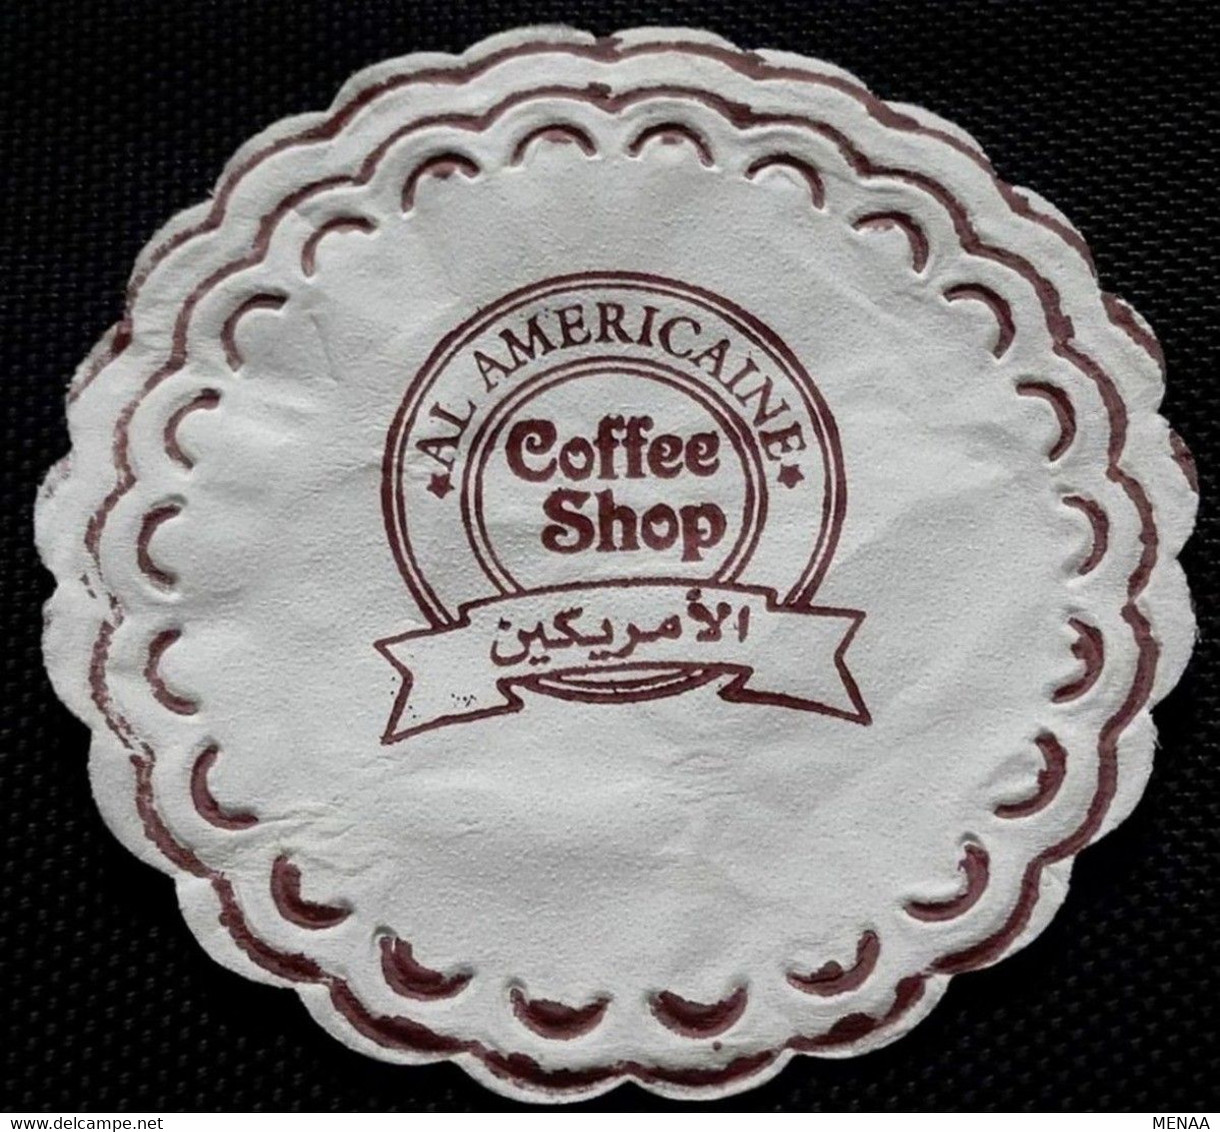 EGYPT - AL AMERICAINE COFFEE SHOP (Egypte) (Egitto) (Ägypten) (Egipto) (Egypten) Africa - Werbeservietten